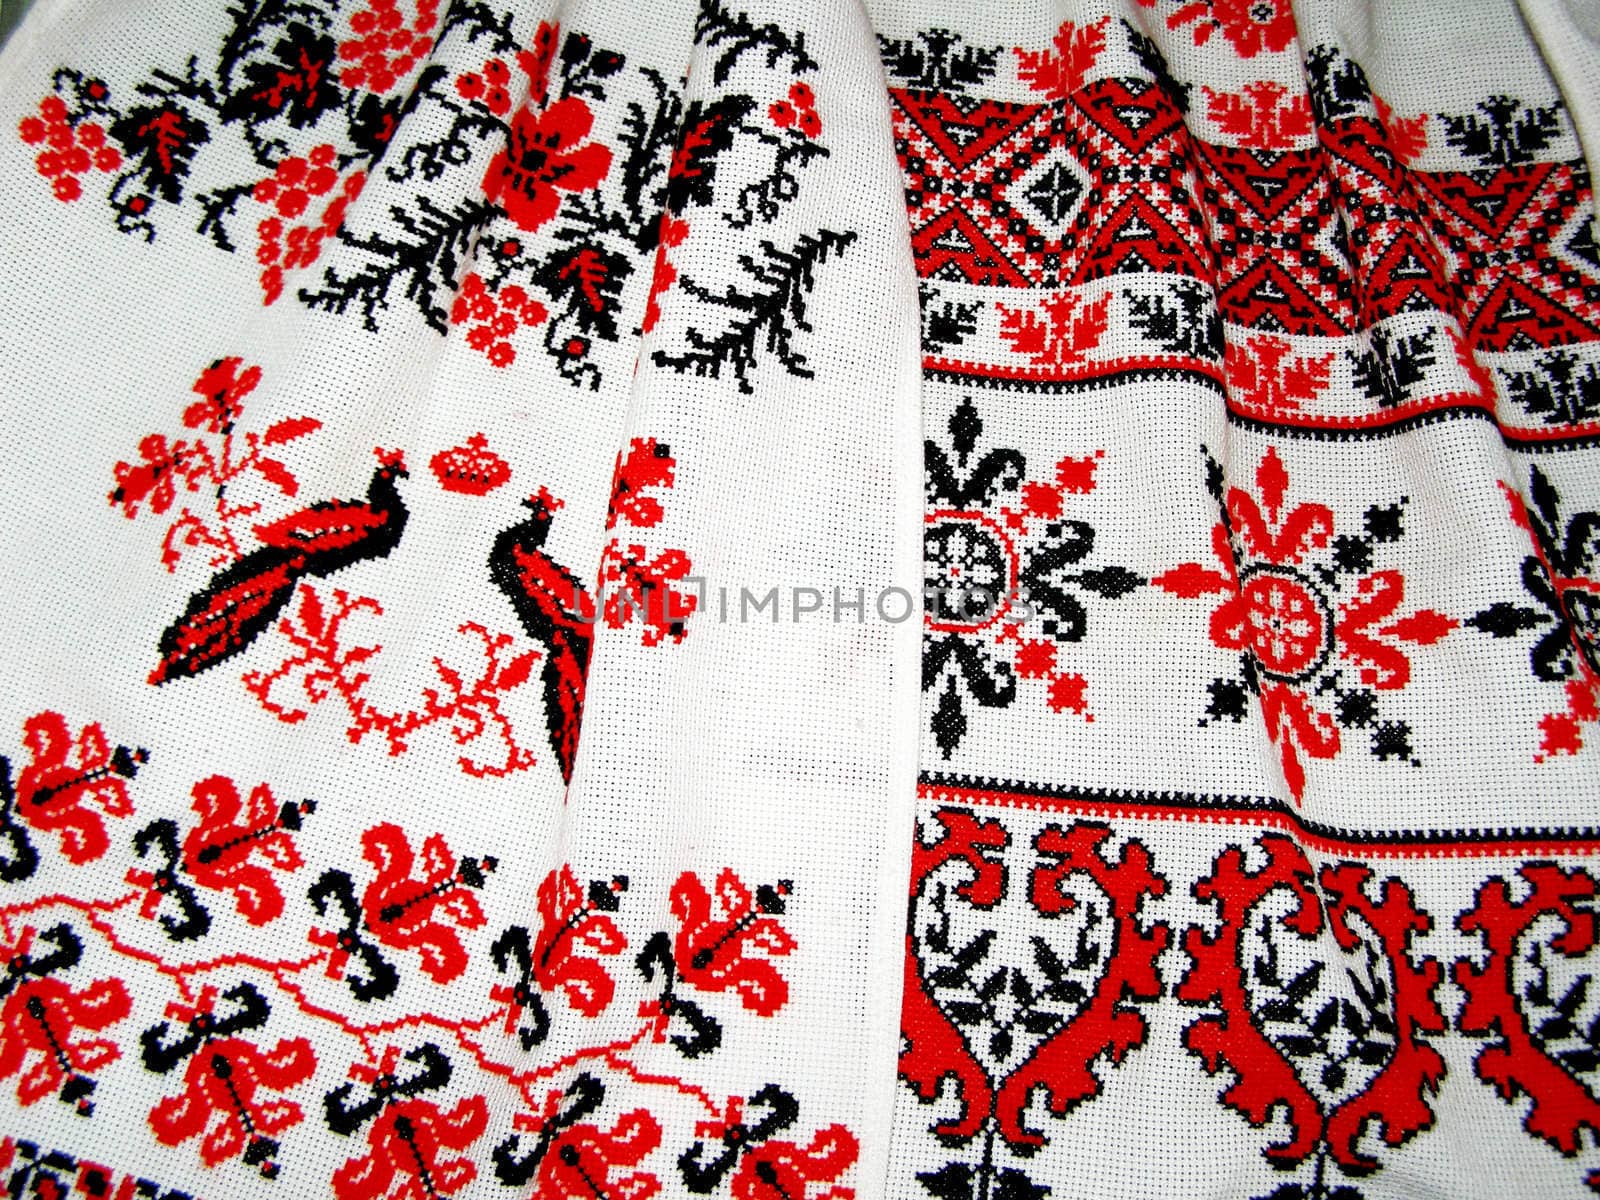 Ukrainian embroidery 1 by Clarushka